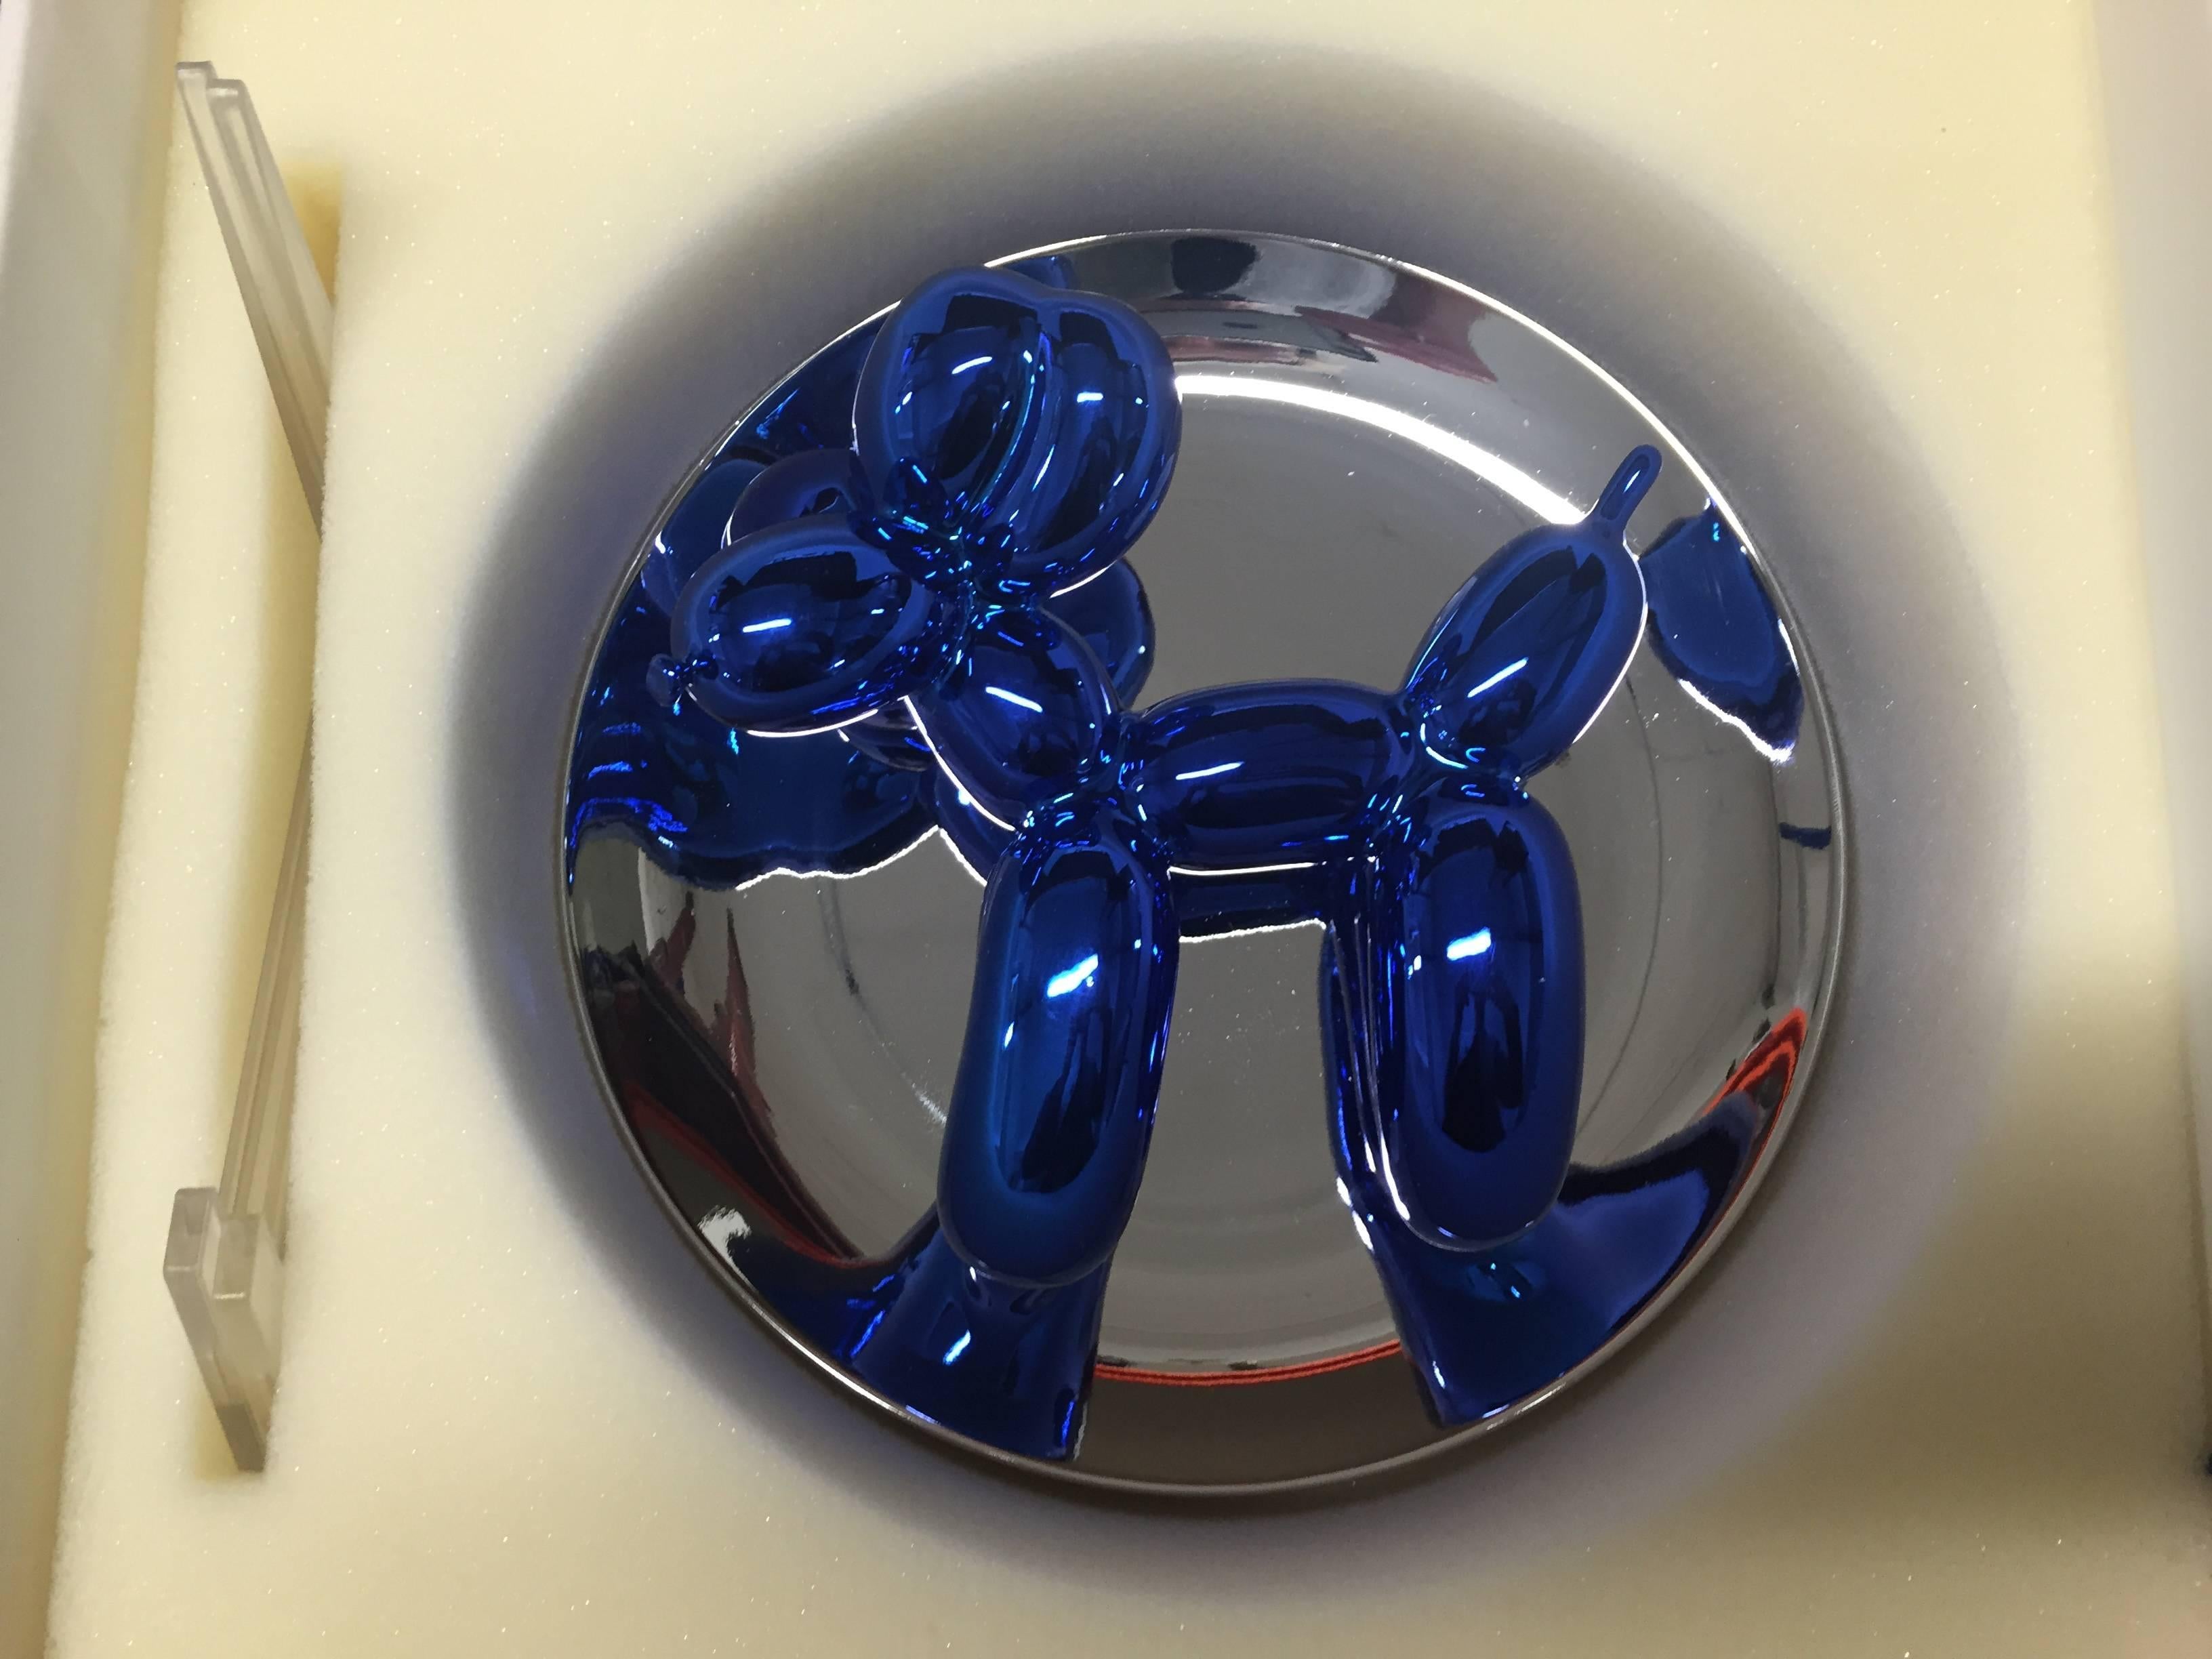 Balloon Dog (Blue) 2002 - Sculpture by Jeff Koons